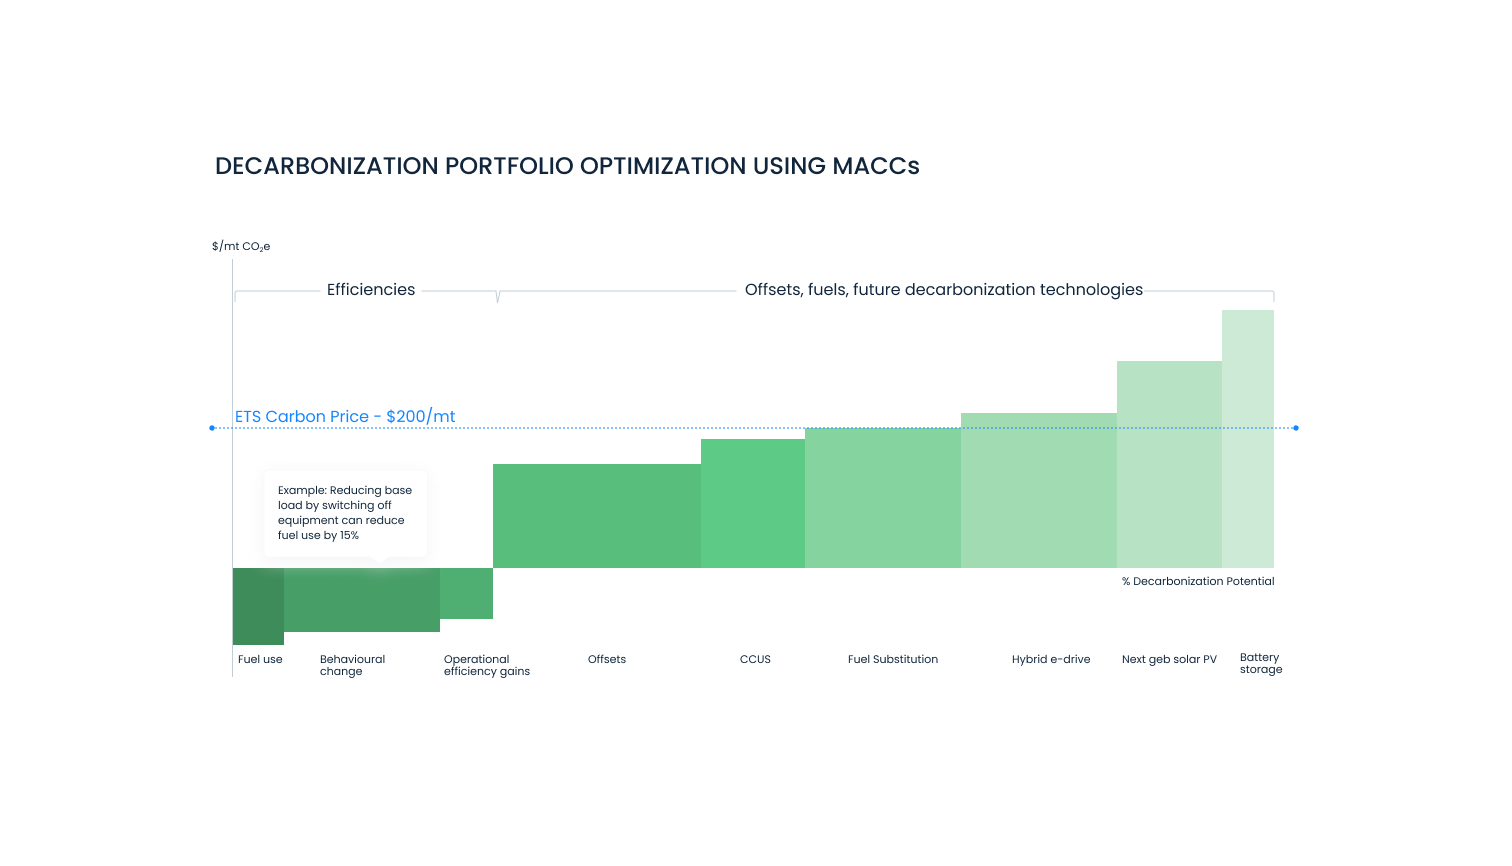 Decarbonization portfolio optimizations using MACCS